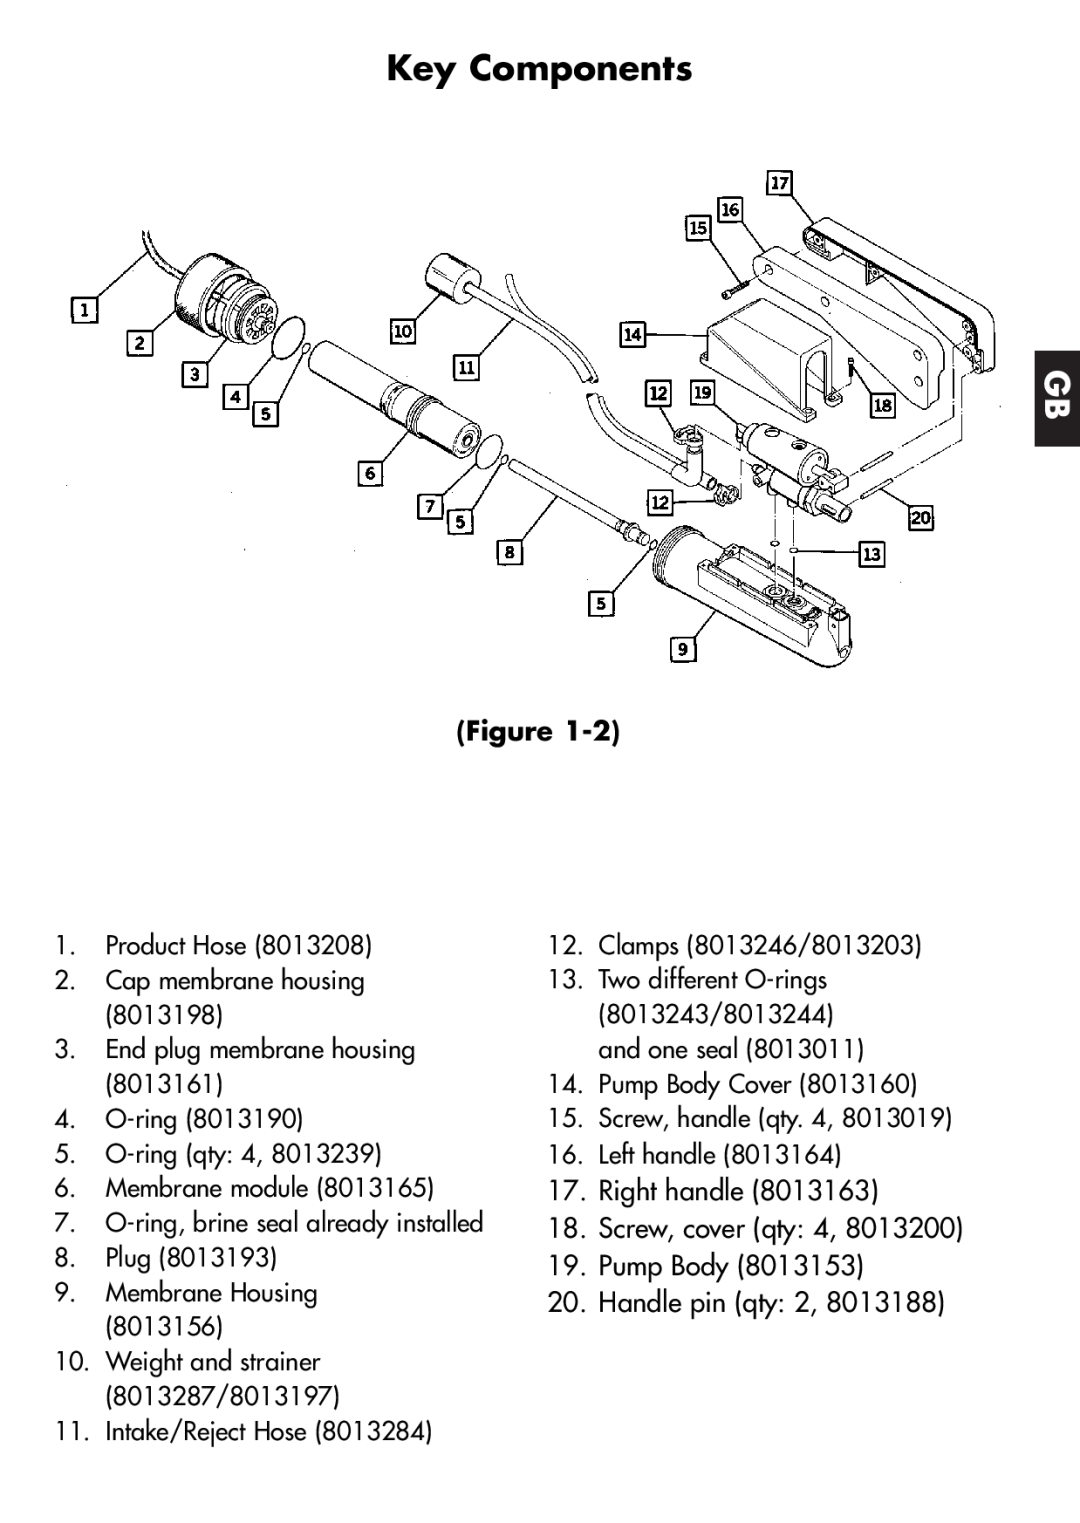 Katadyn 8013419, 8013418 manual Key Components, Right handle 18.Screw, cover qty, Pump Body 20.Handle pin qty 